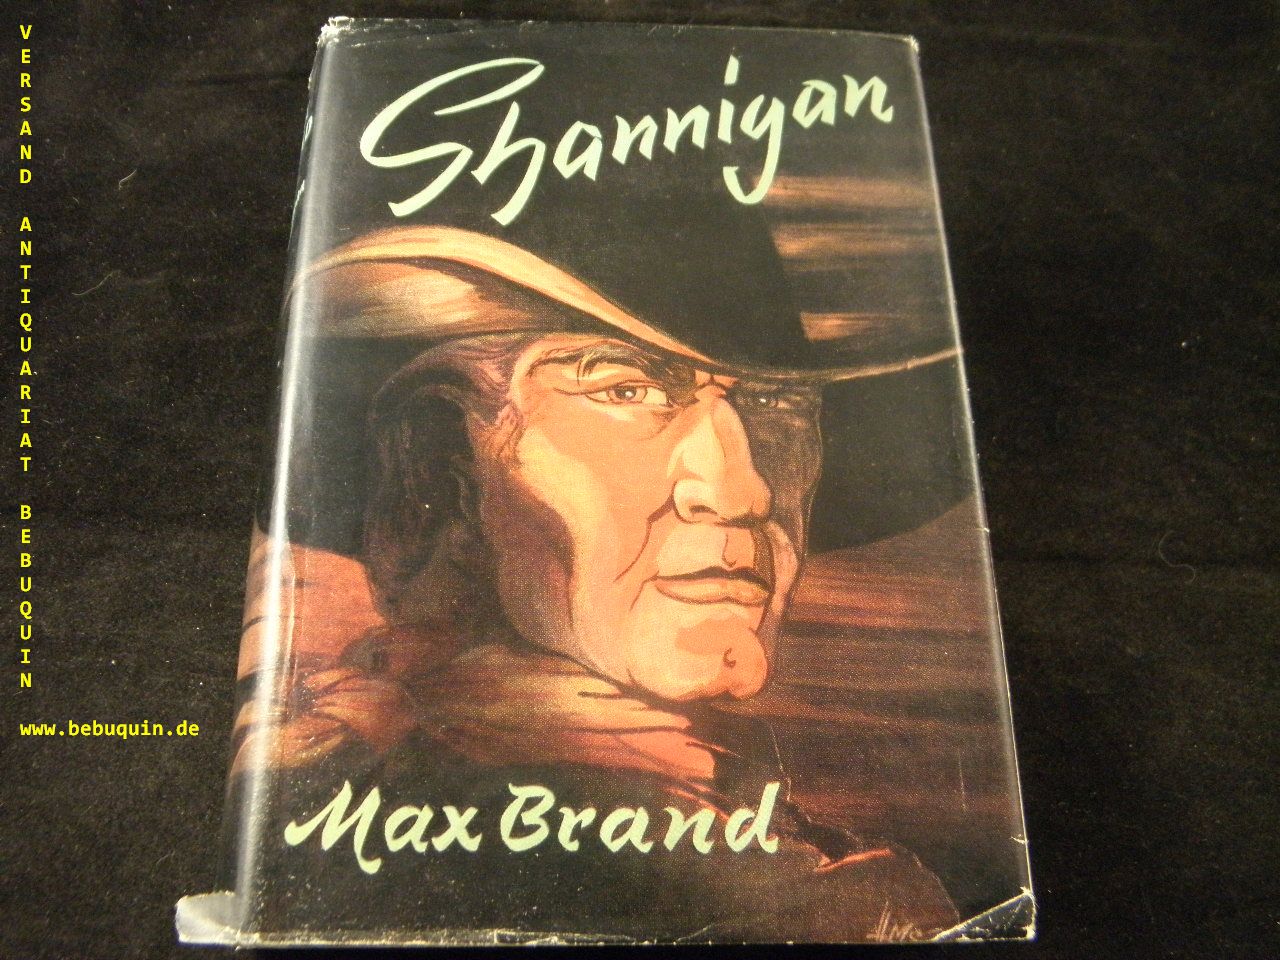 BRAND, Max: - Shannigan.